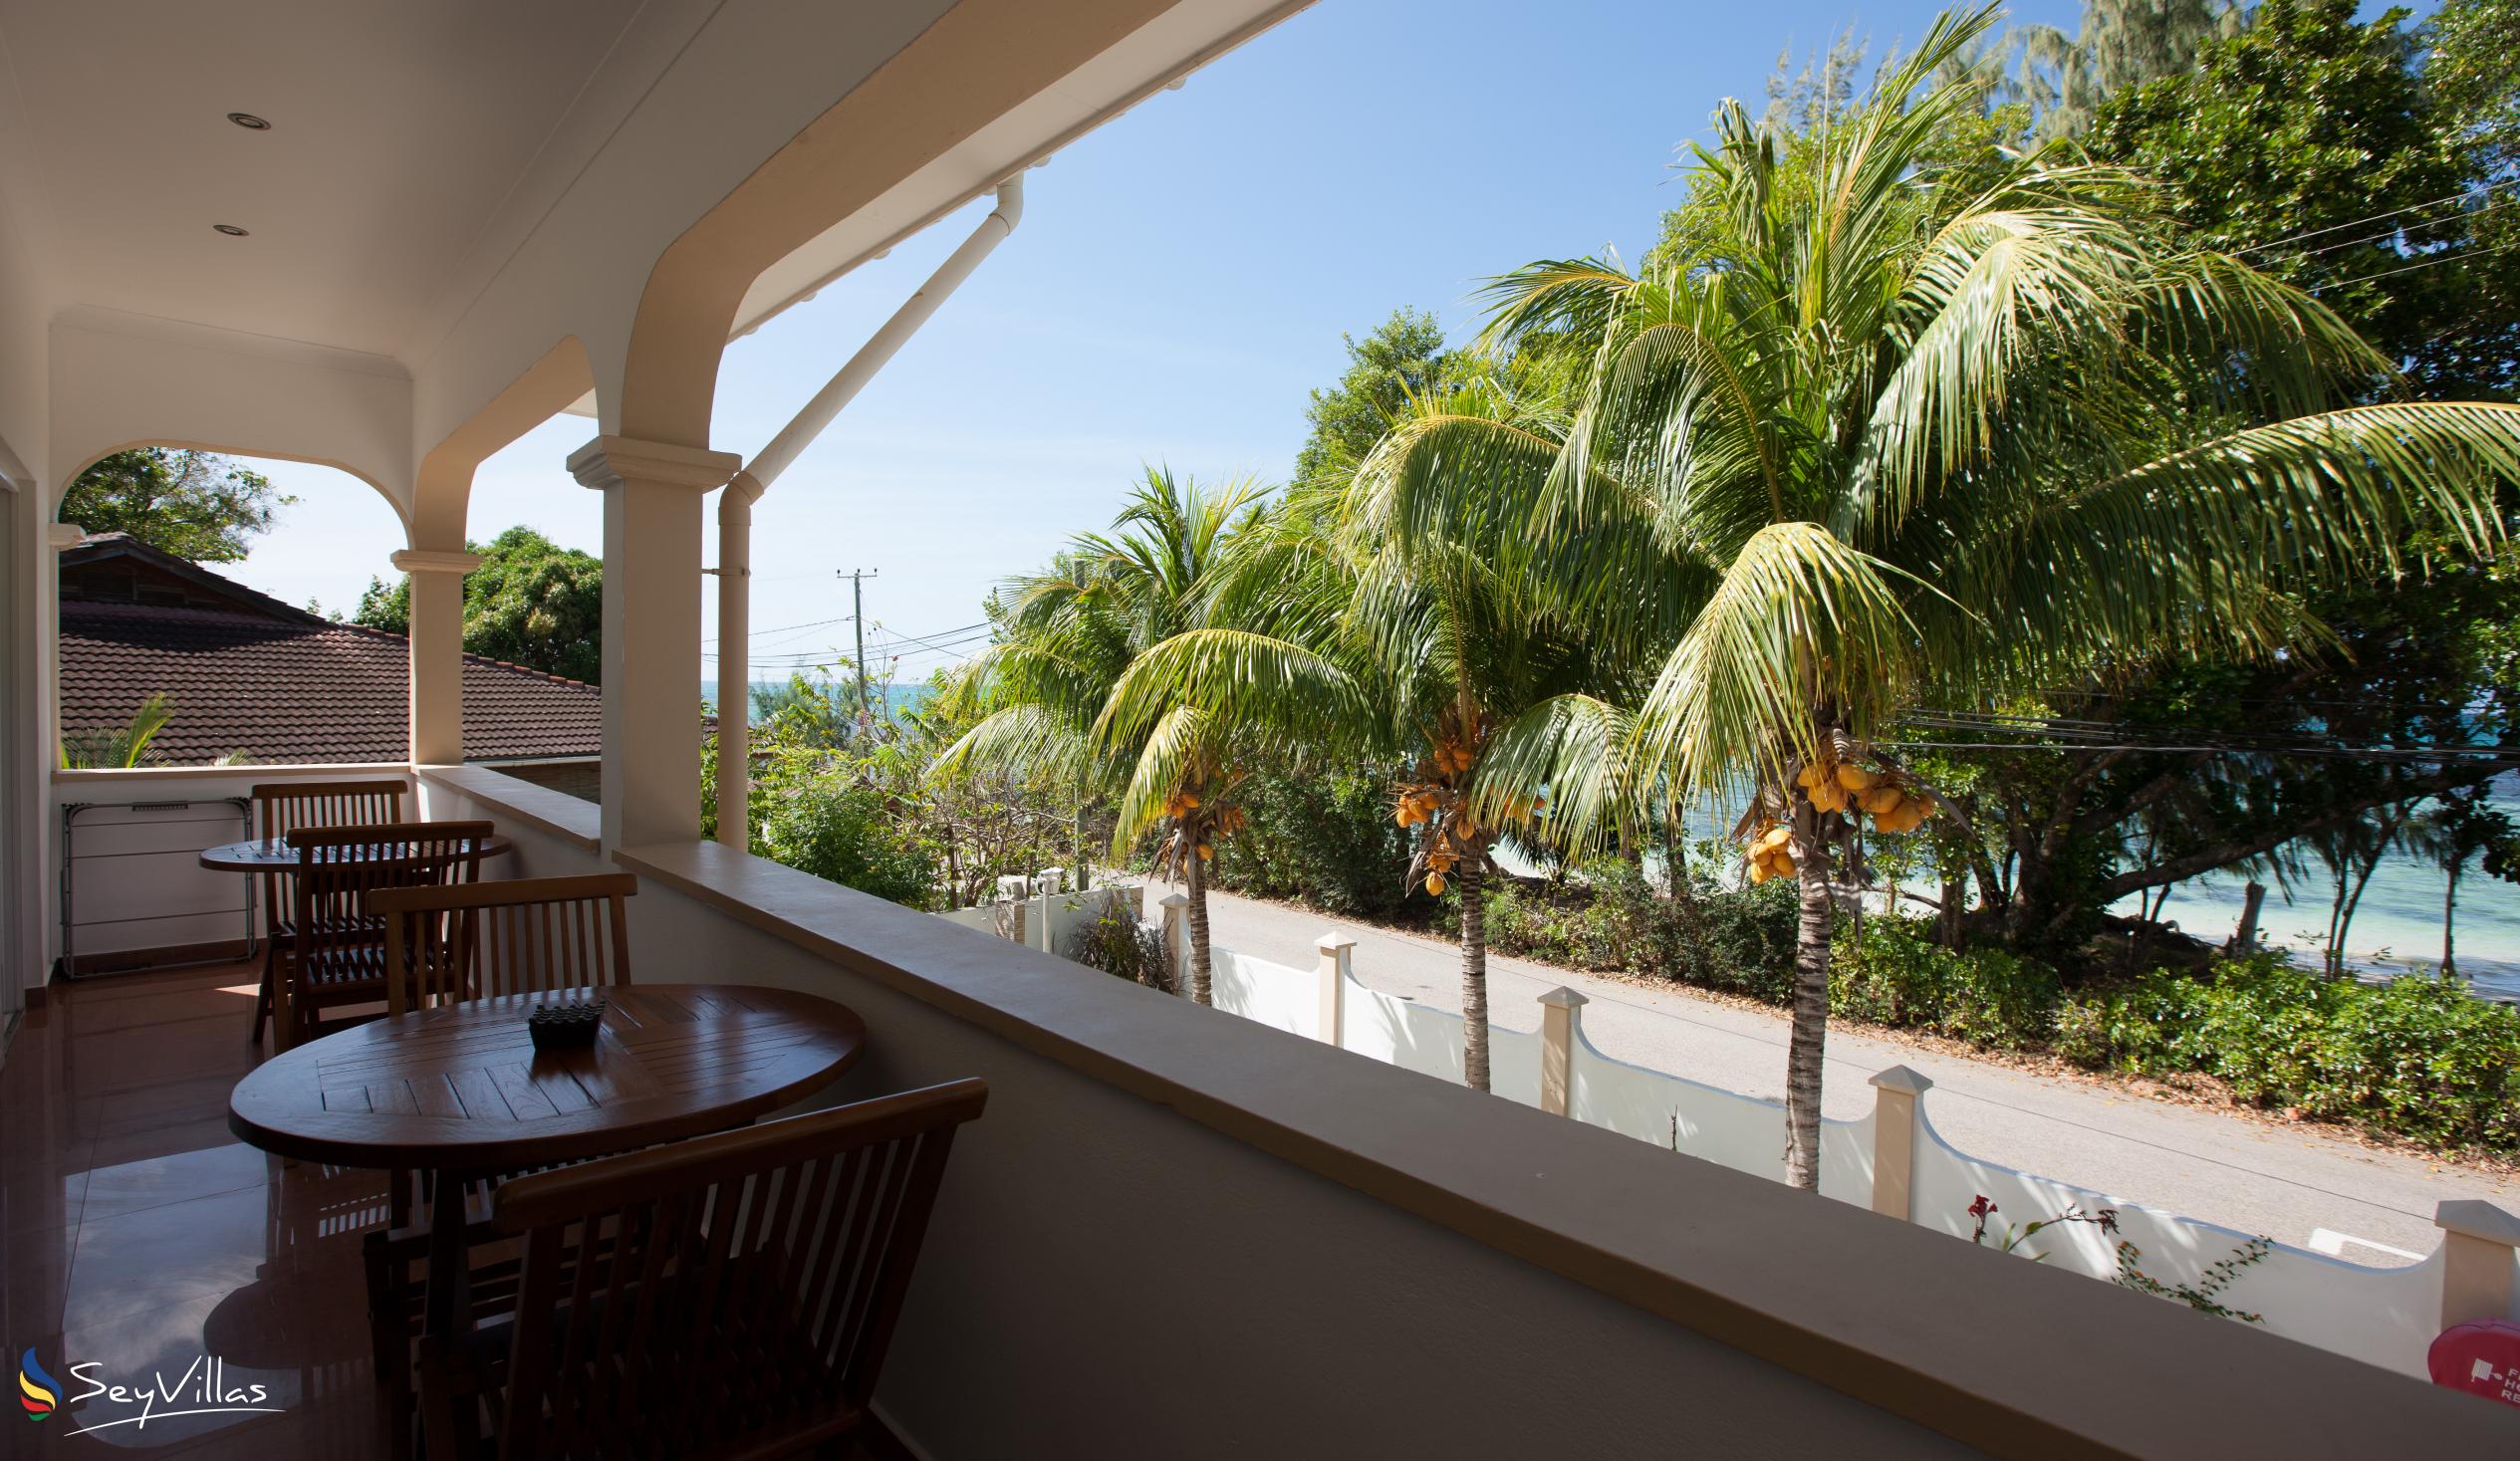 Foto 10: YASAD Luxury Beach Residence - Appartement 3 chambres - Praslin (Seychelles)